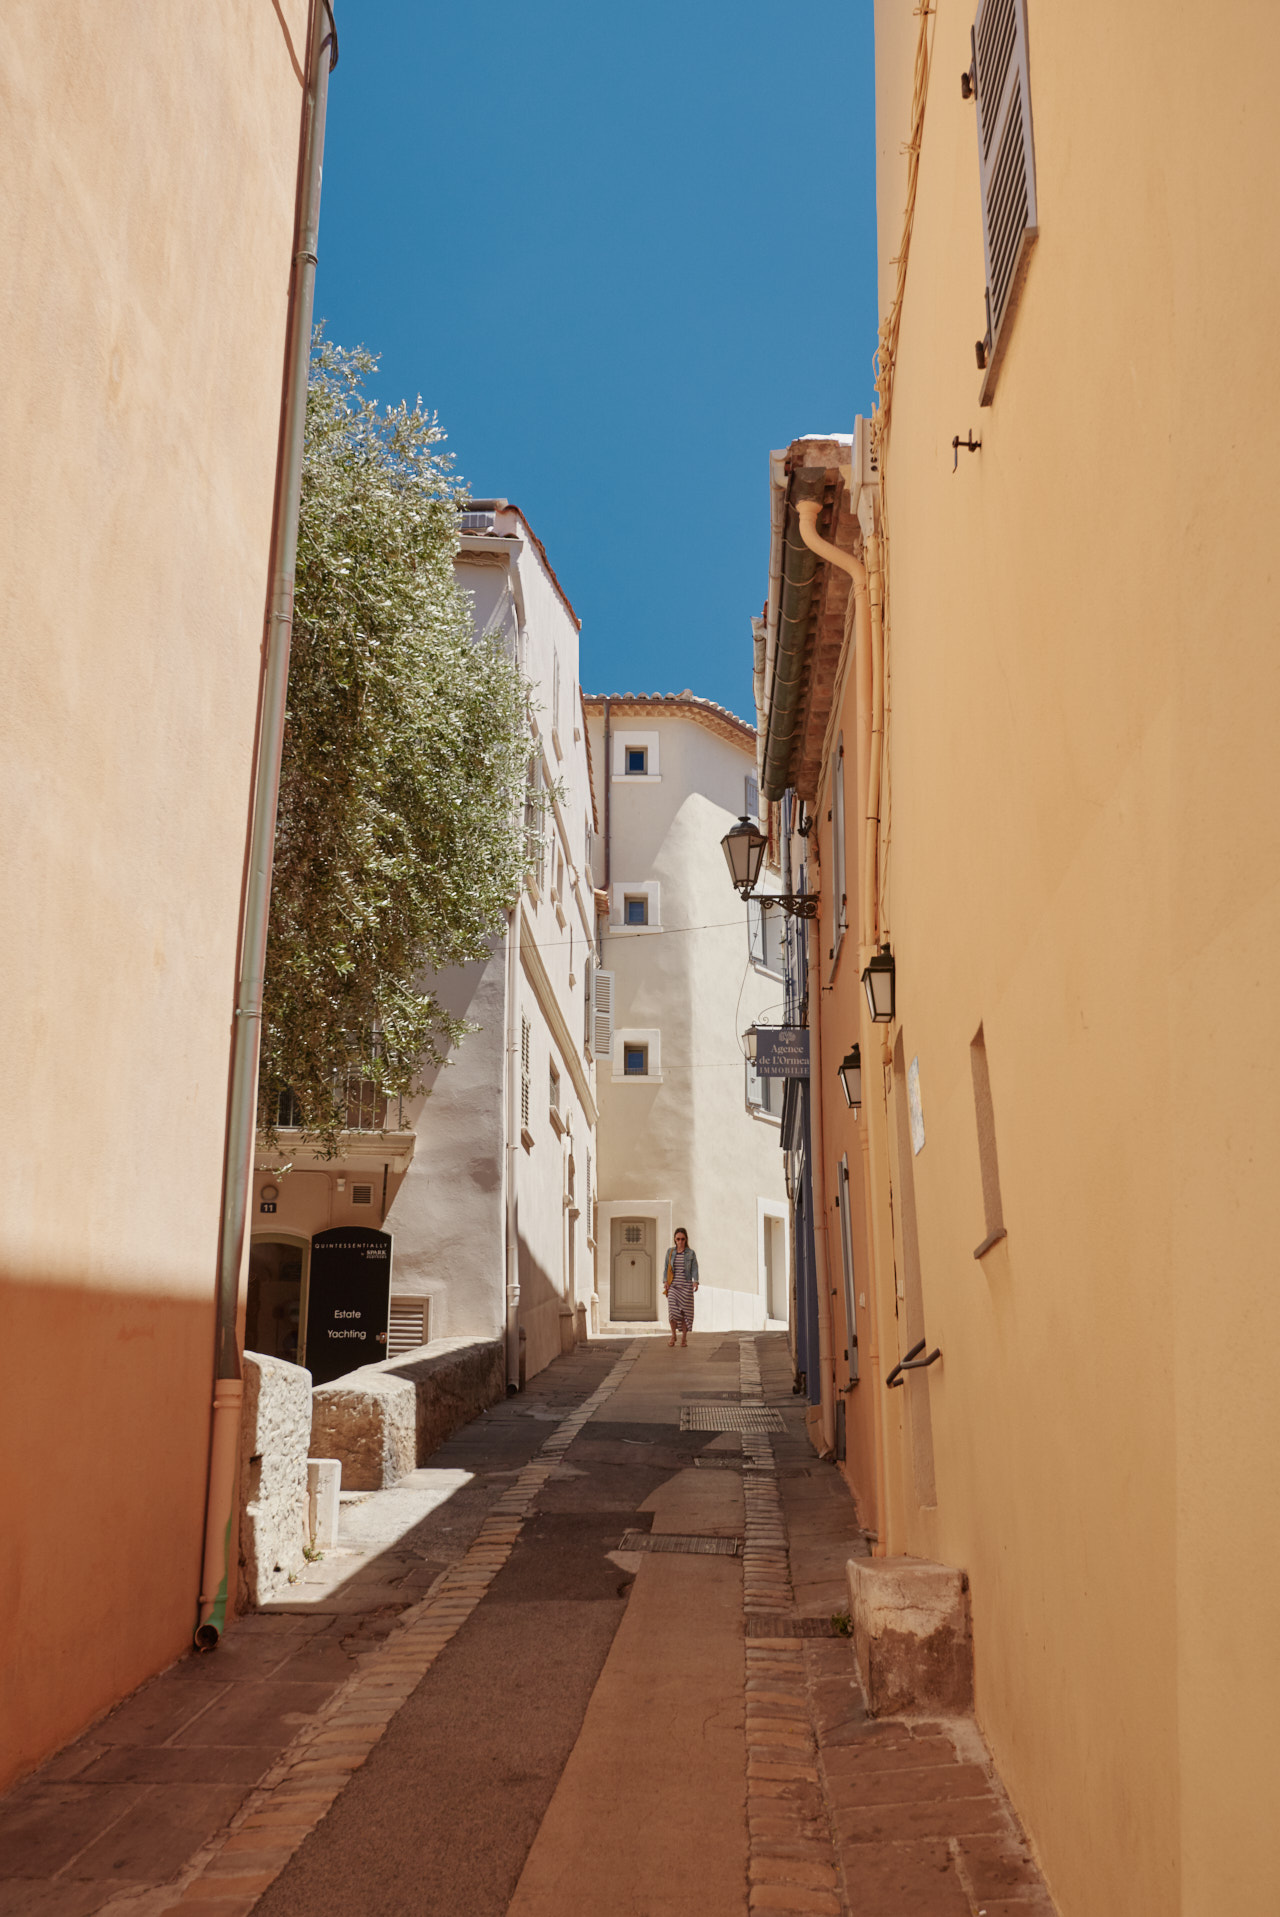 Streets of Saint-Tropez